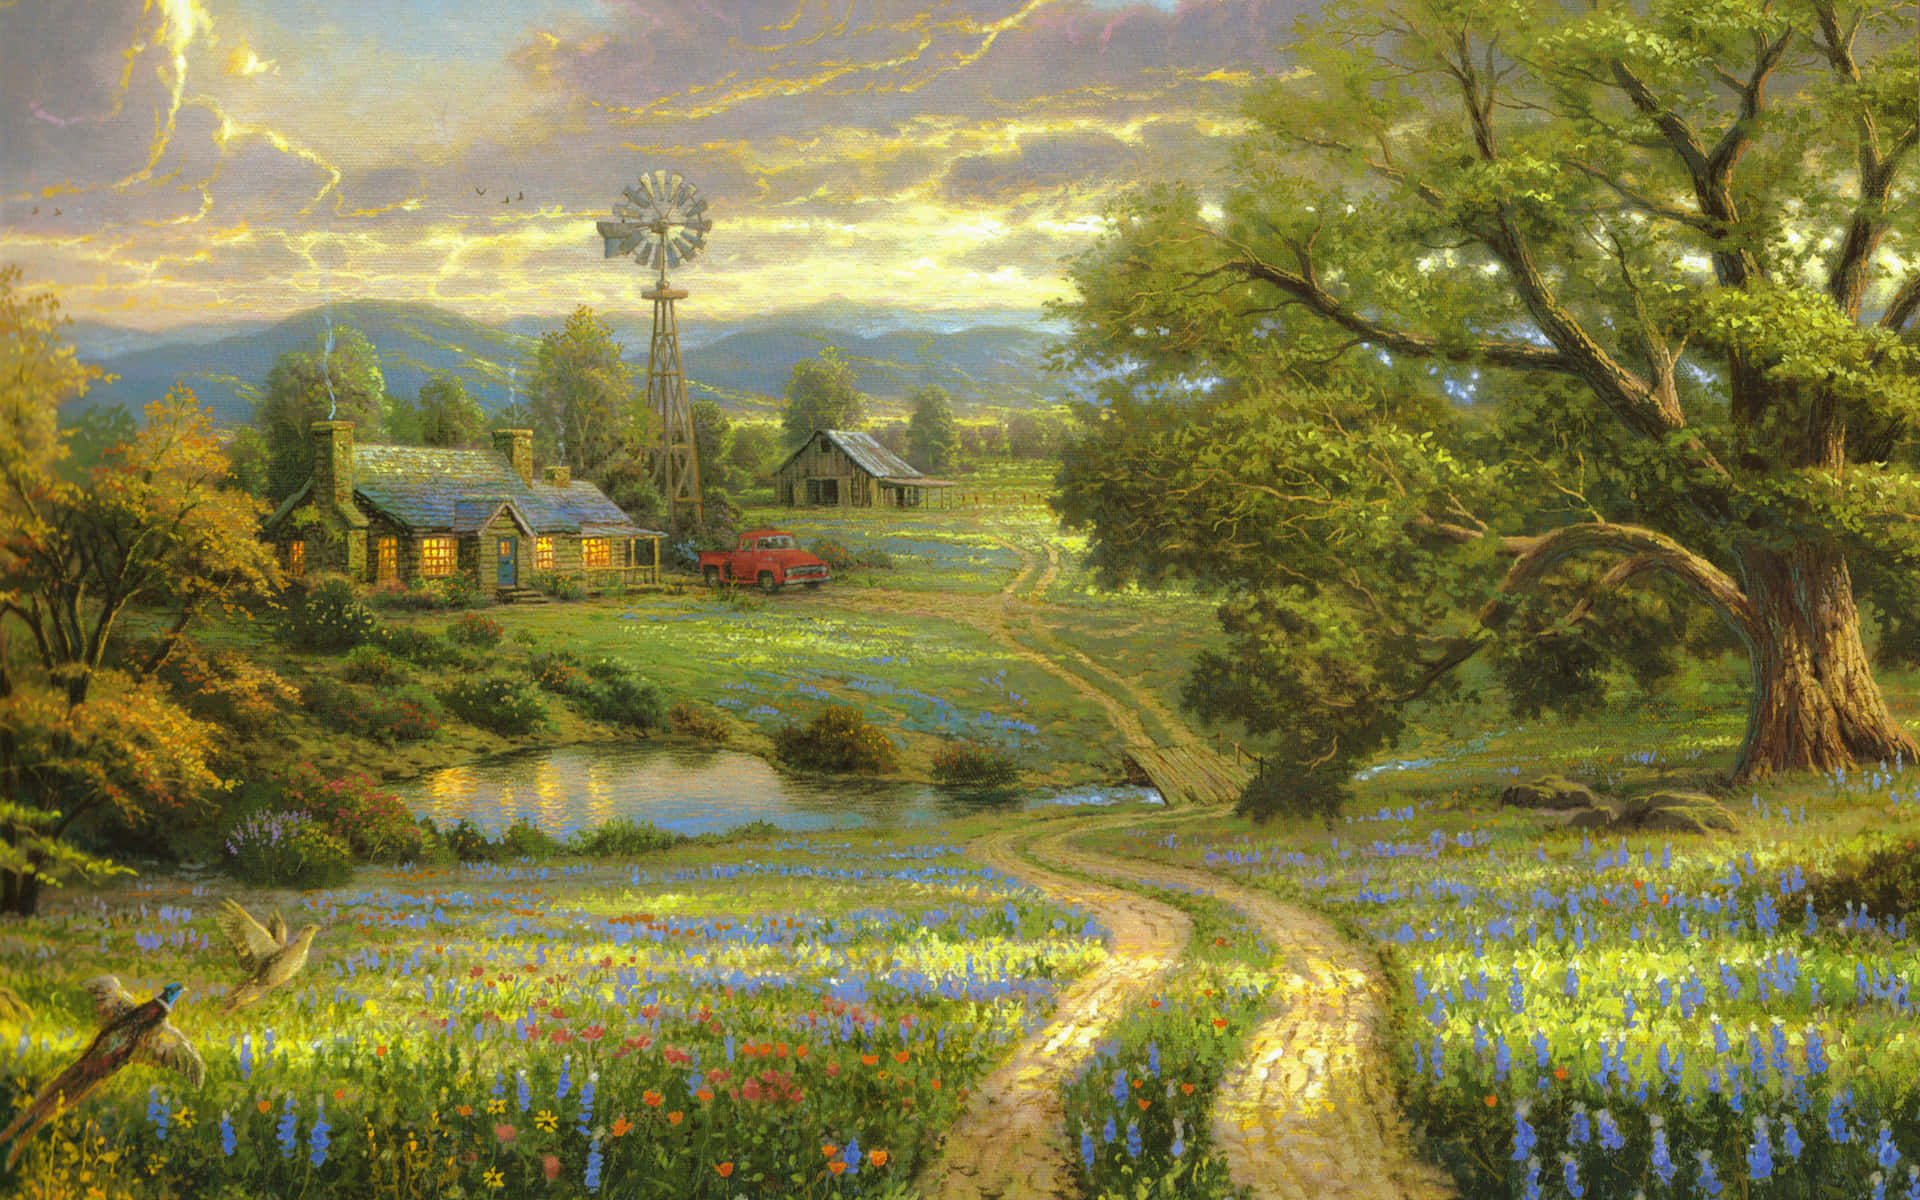 Mesmerizing Landscape of a Beautiful Painting Wallpaper